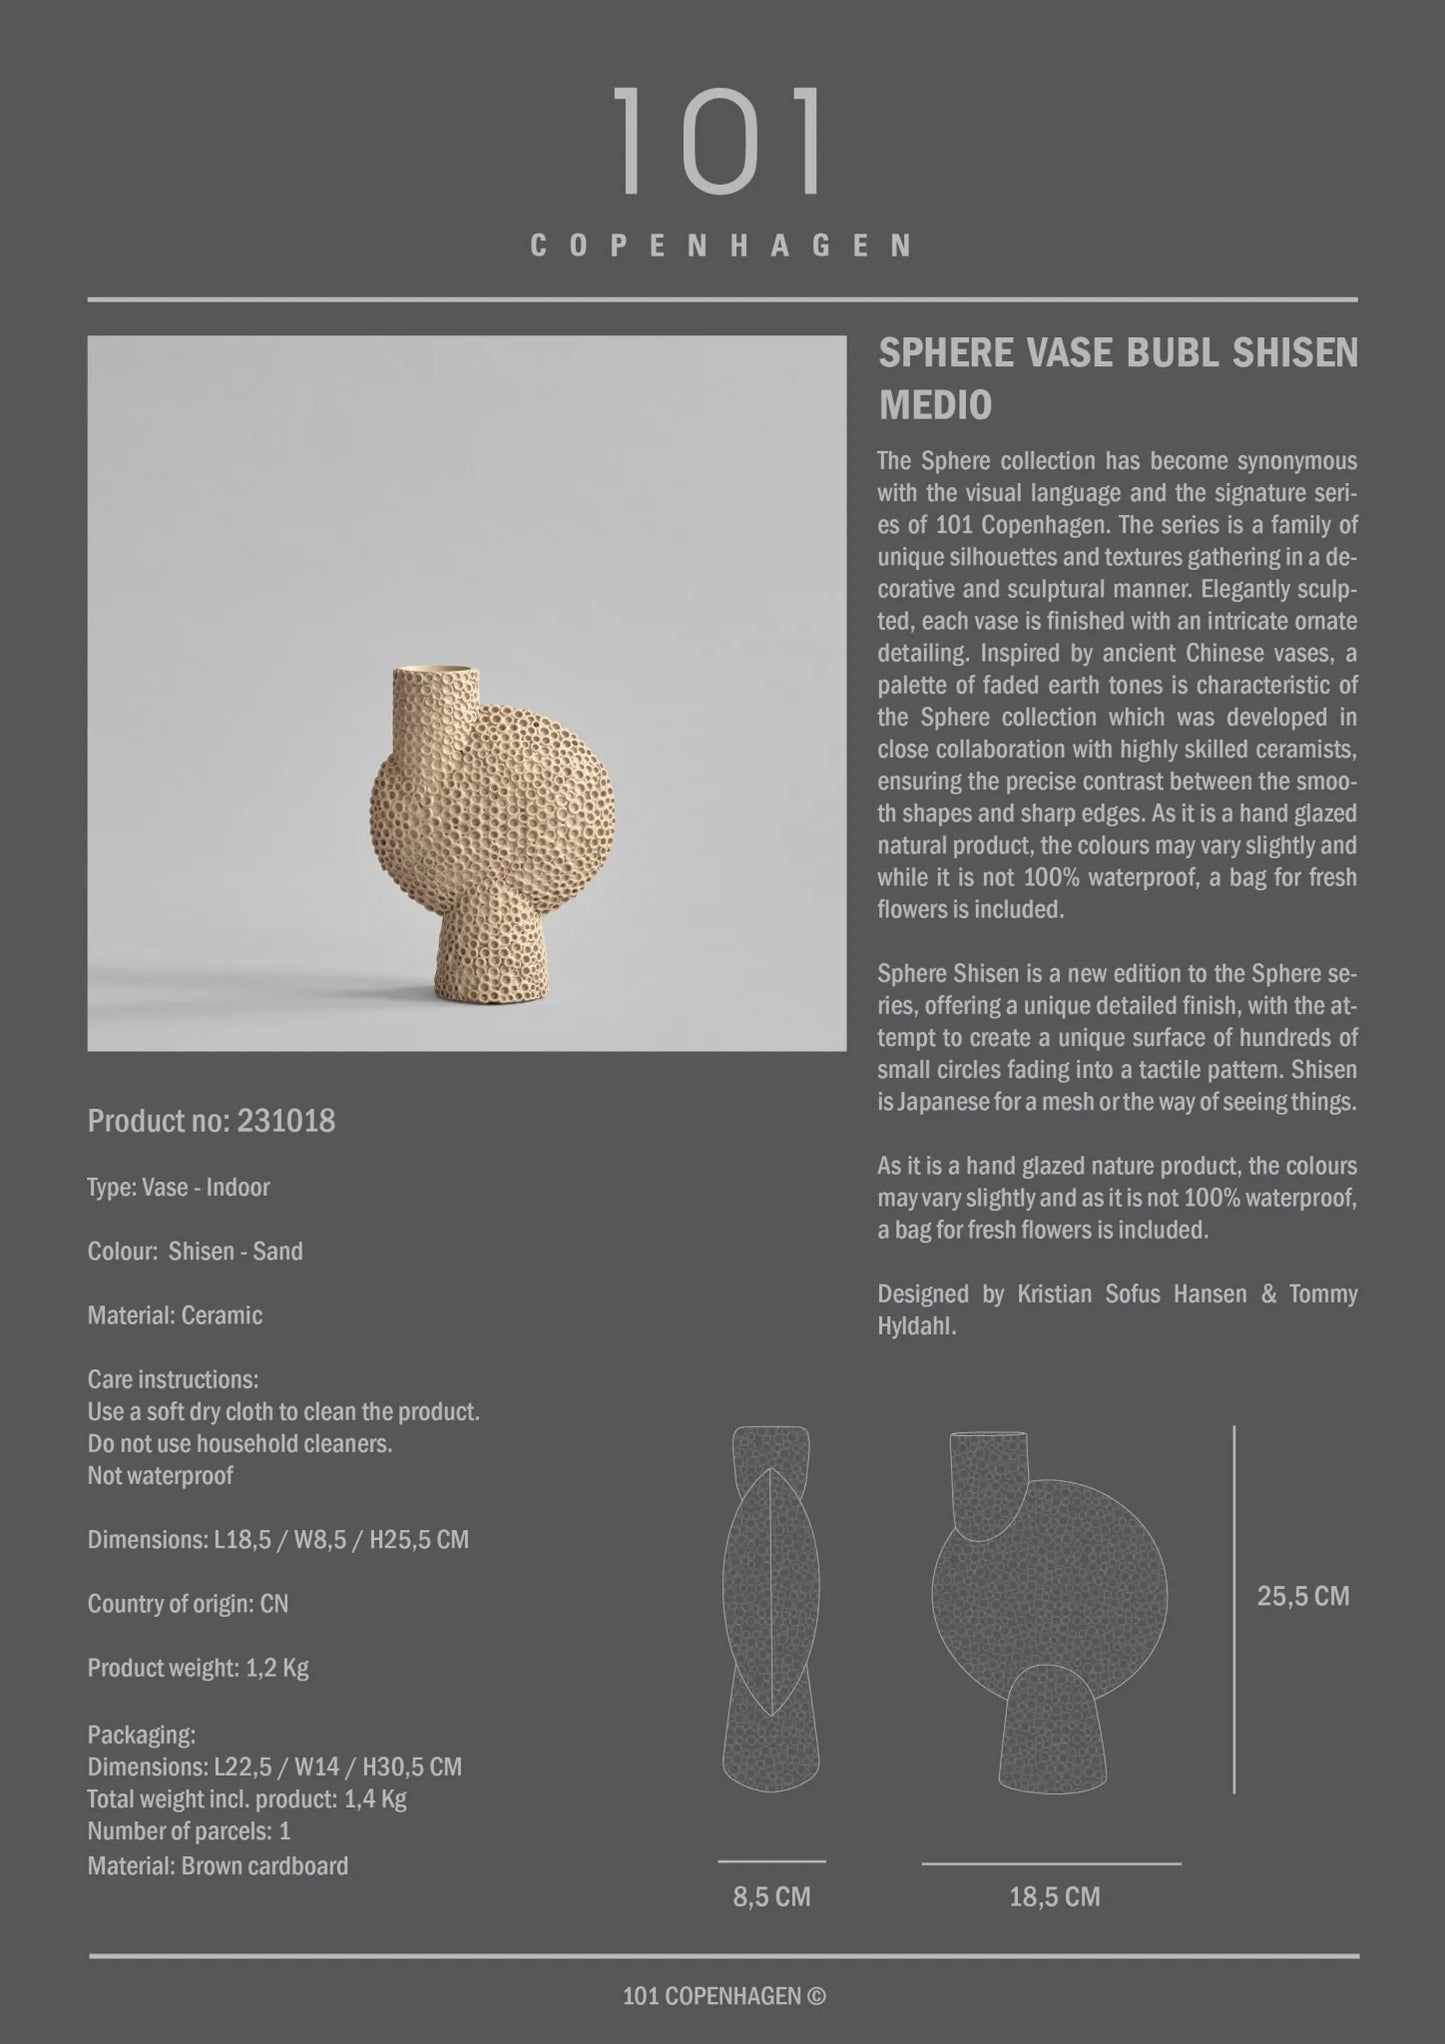 Sphere Vase Bubl Shisen, Medio - Sand by 101 Copenhagen